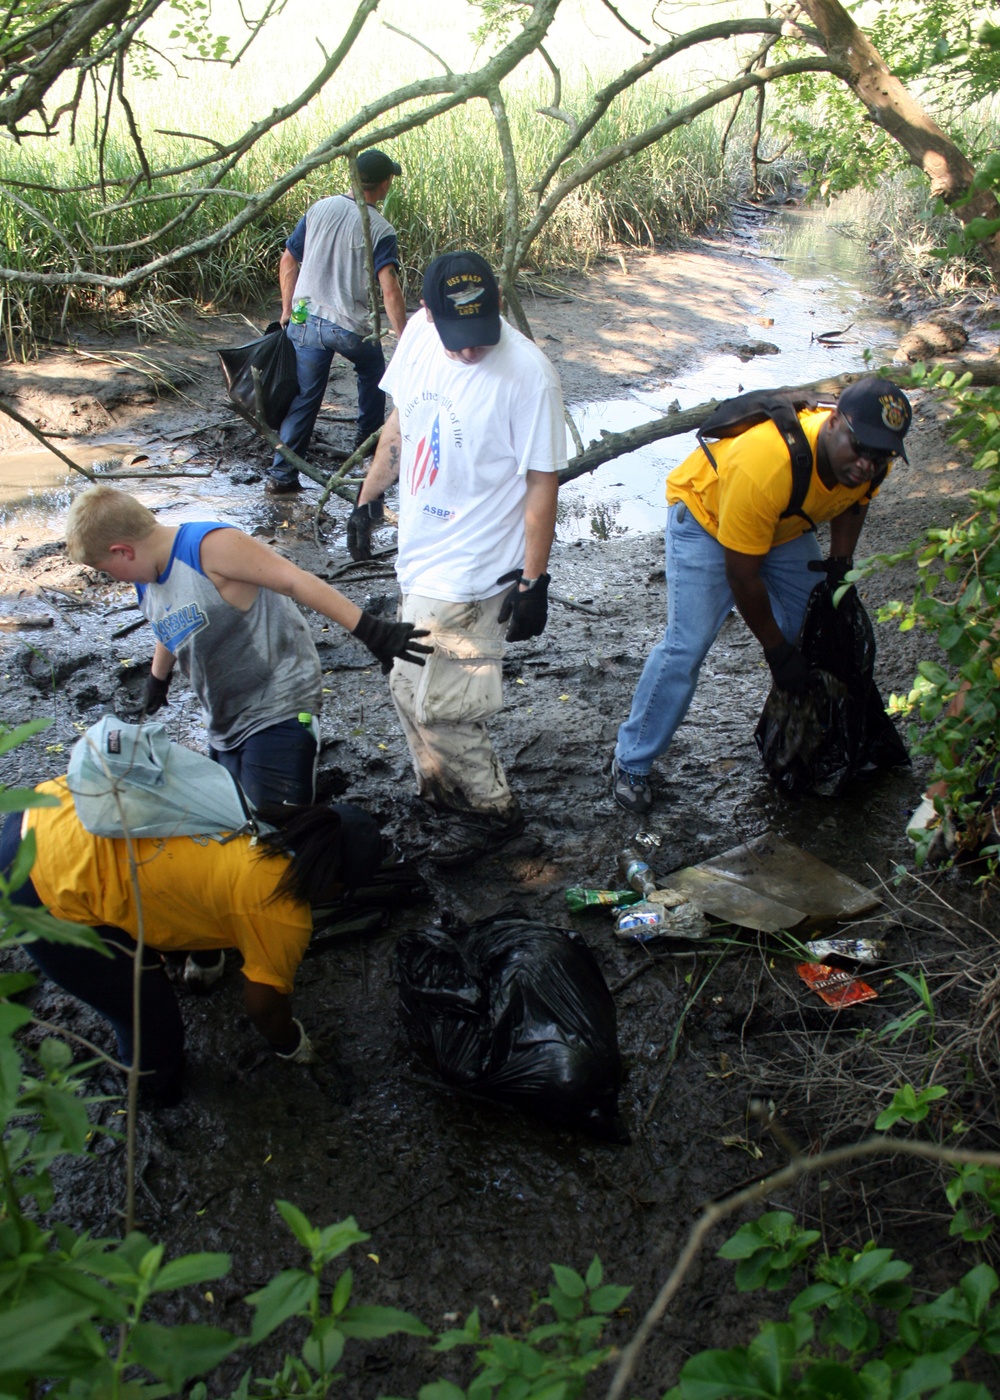 Sailors help keep Chesapeake Bay clean